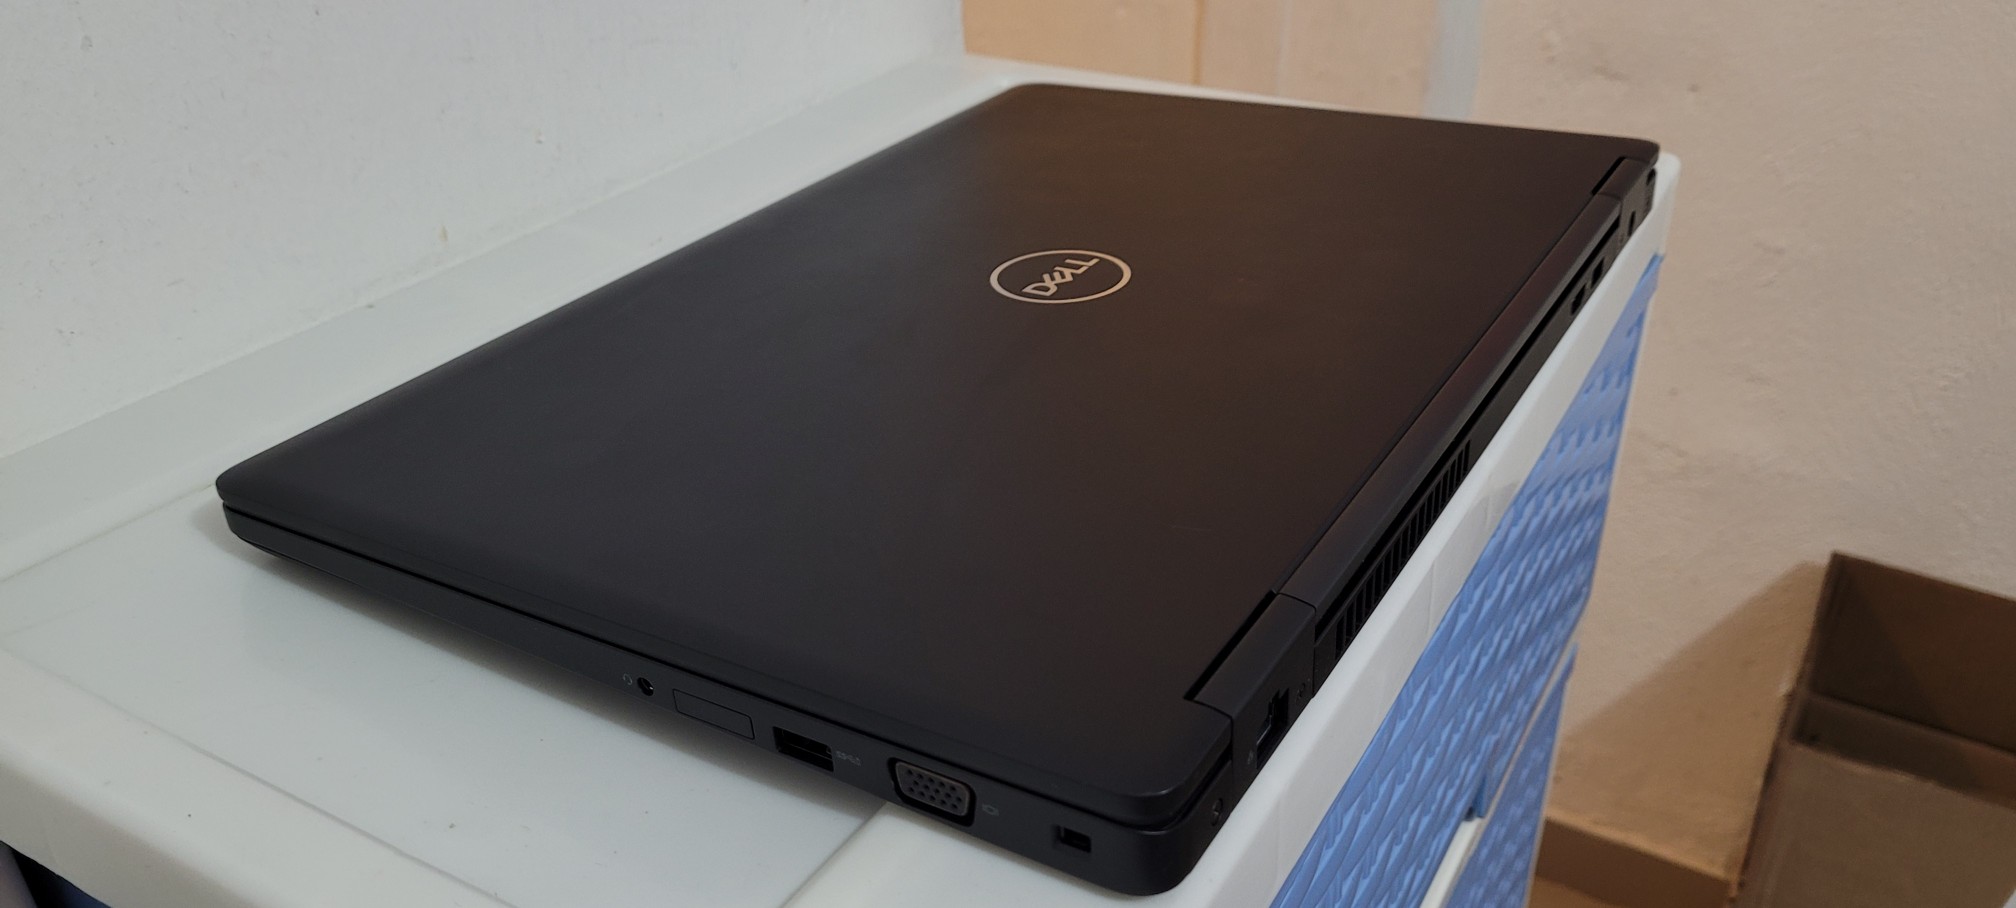 computadoras y laptops - Dell 5580 17 Pulg Core i7 7ma Gen Ram 16gb ddr4 Disco 256gb SSD Video Nvidea 10g 2